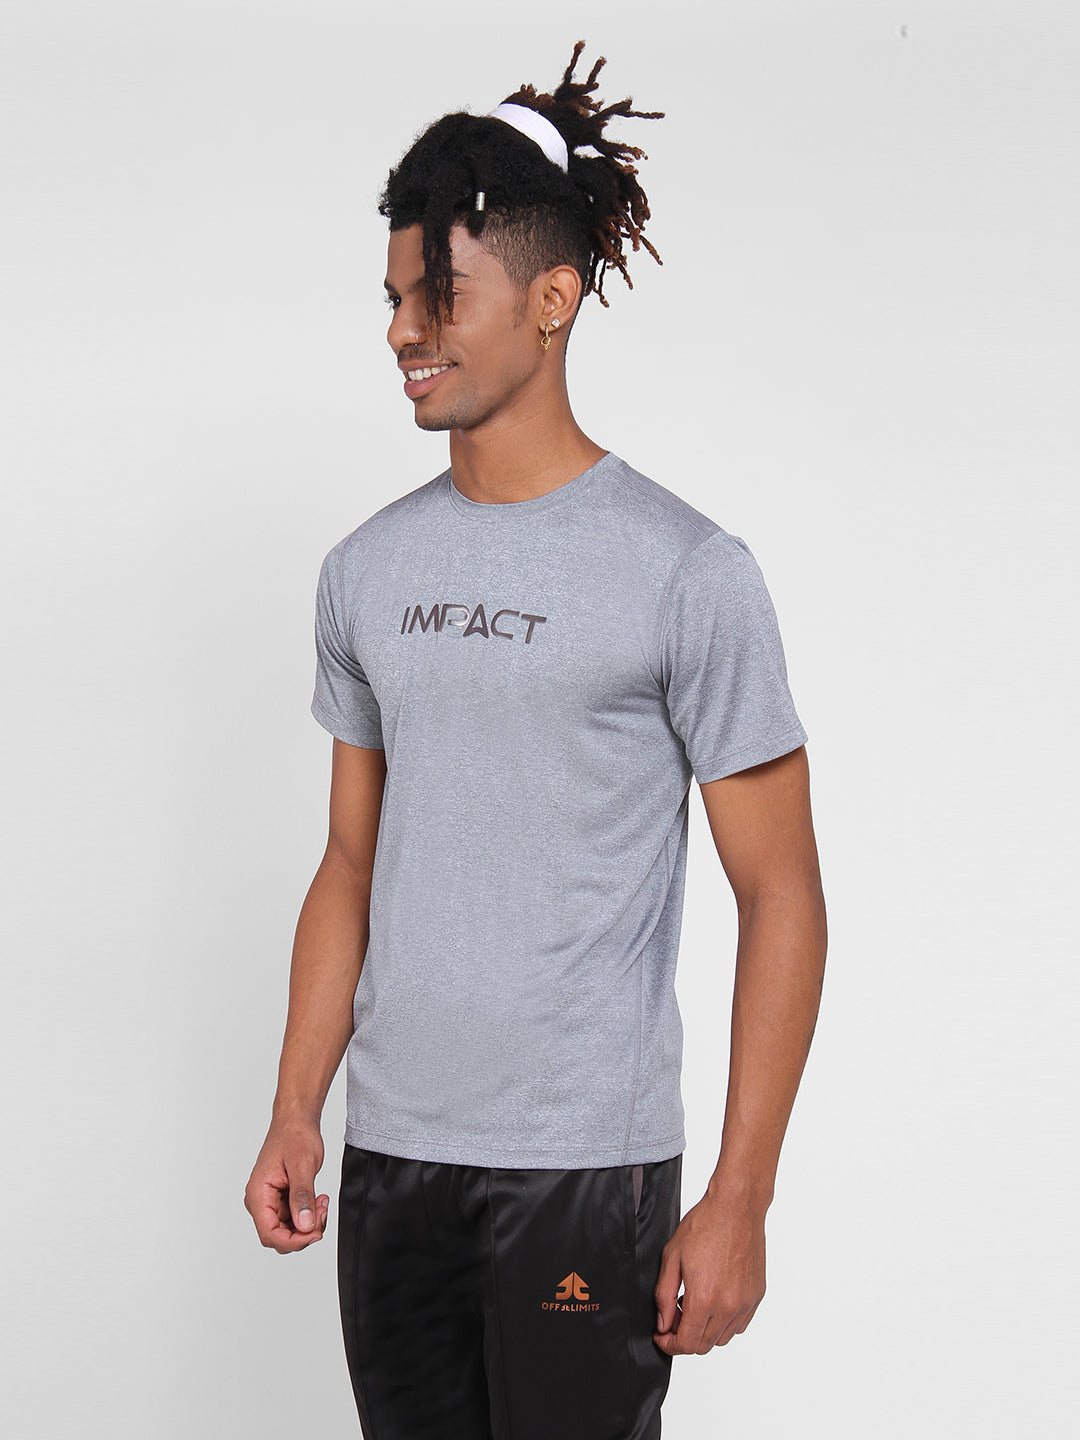 IMPACT TEE Men Tshirts & Graphic Tees